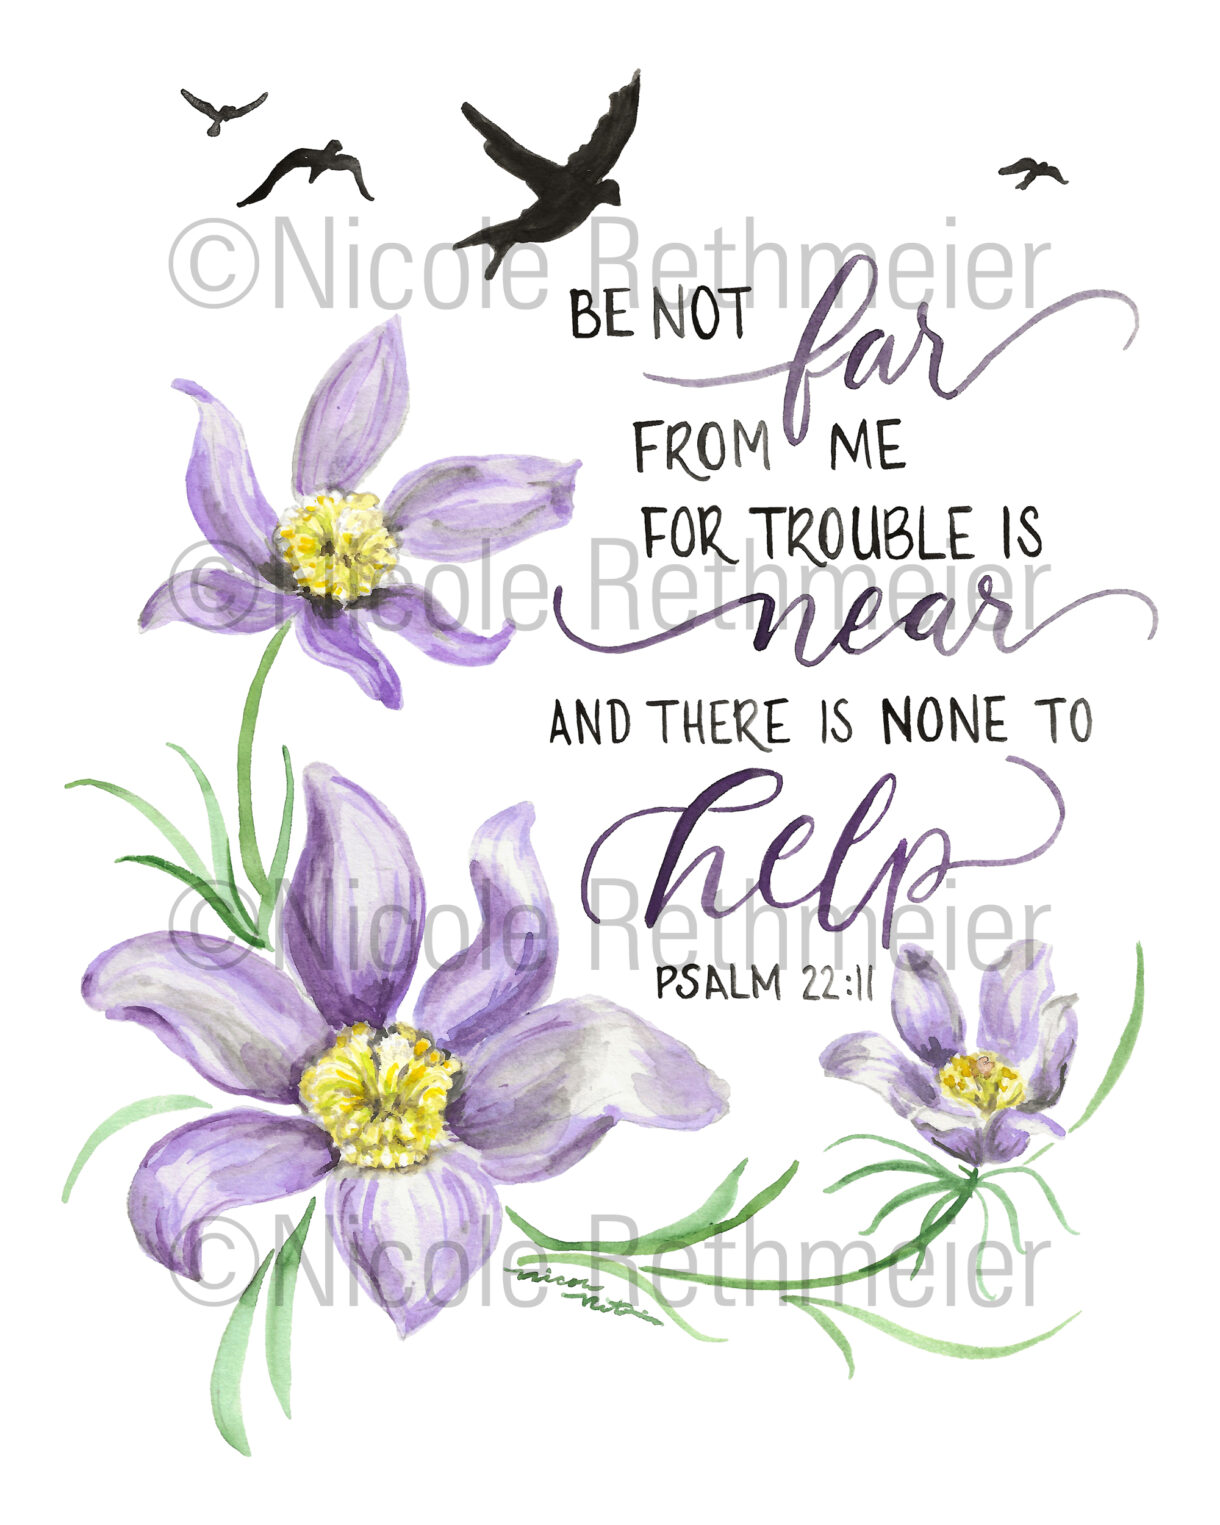 Be Near Psalm 22:11 - Pasqueflower and Birds watercolor fine art print